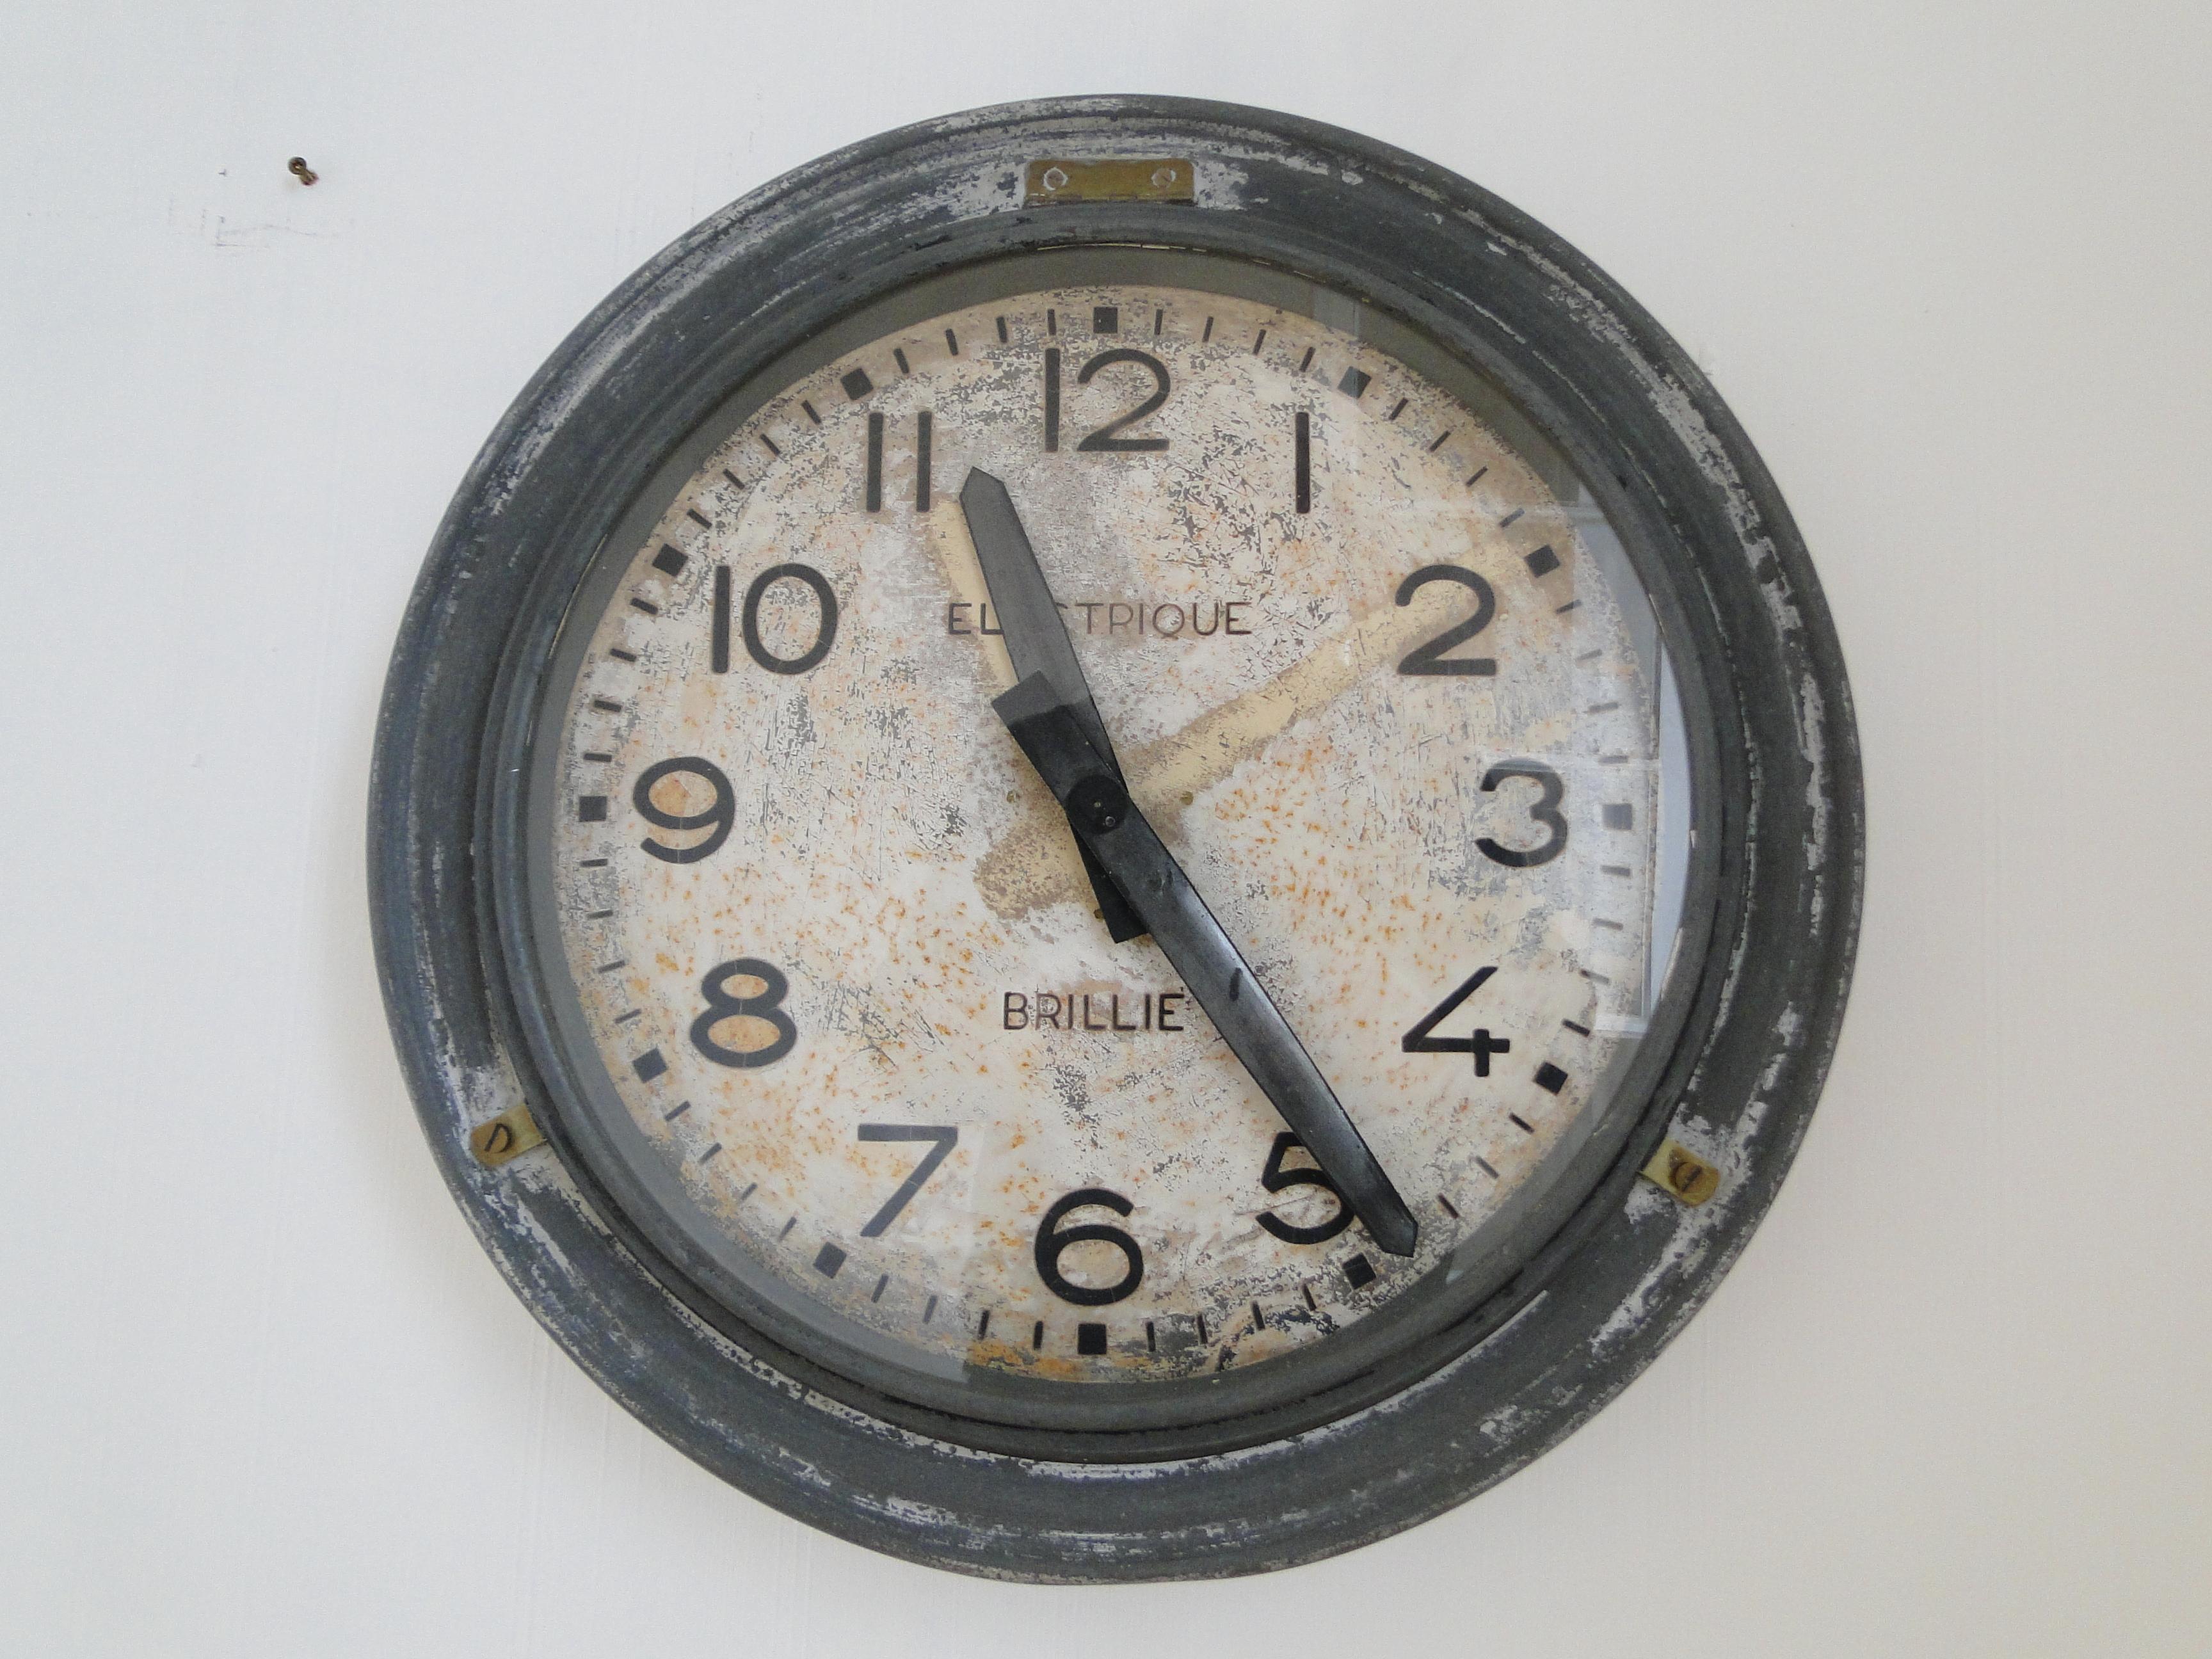 Brillie Vintage French Station Railway Clock Factory Industrial Paris France 3